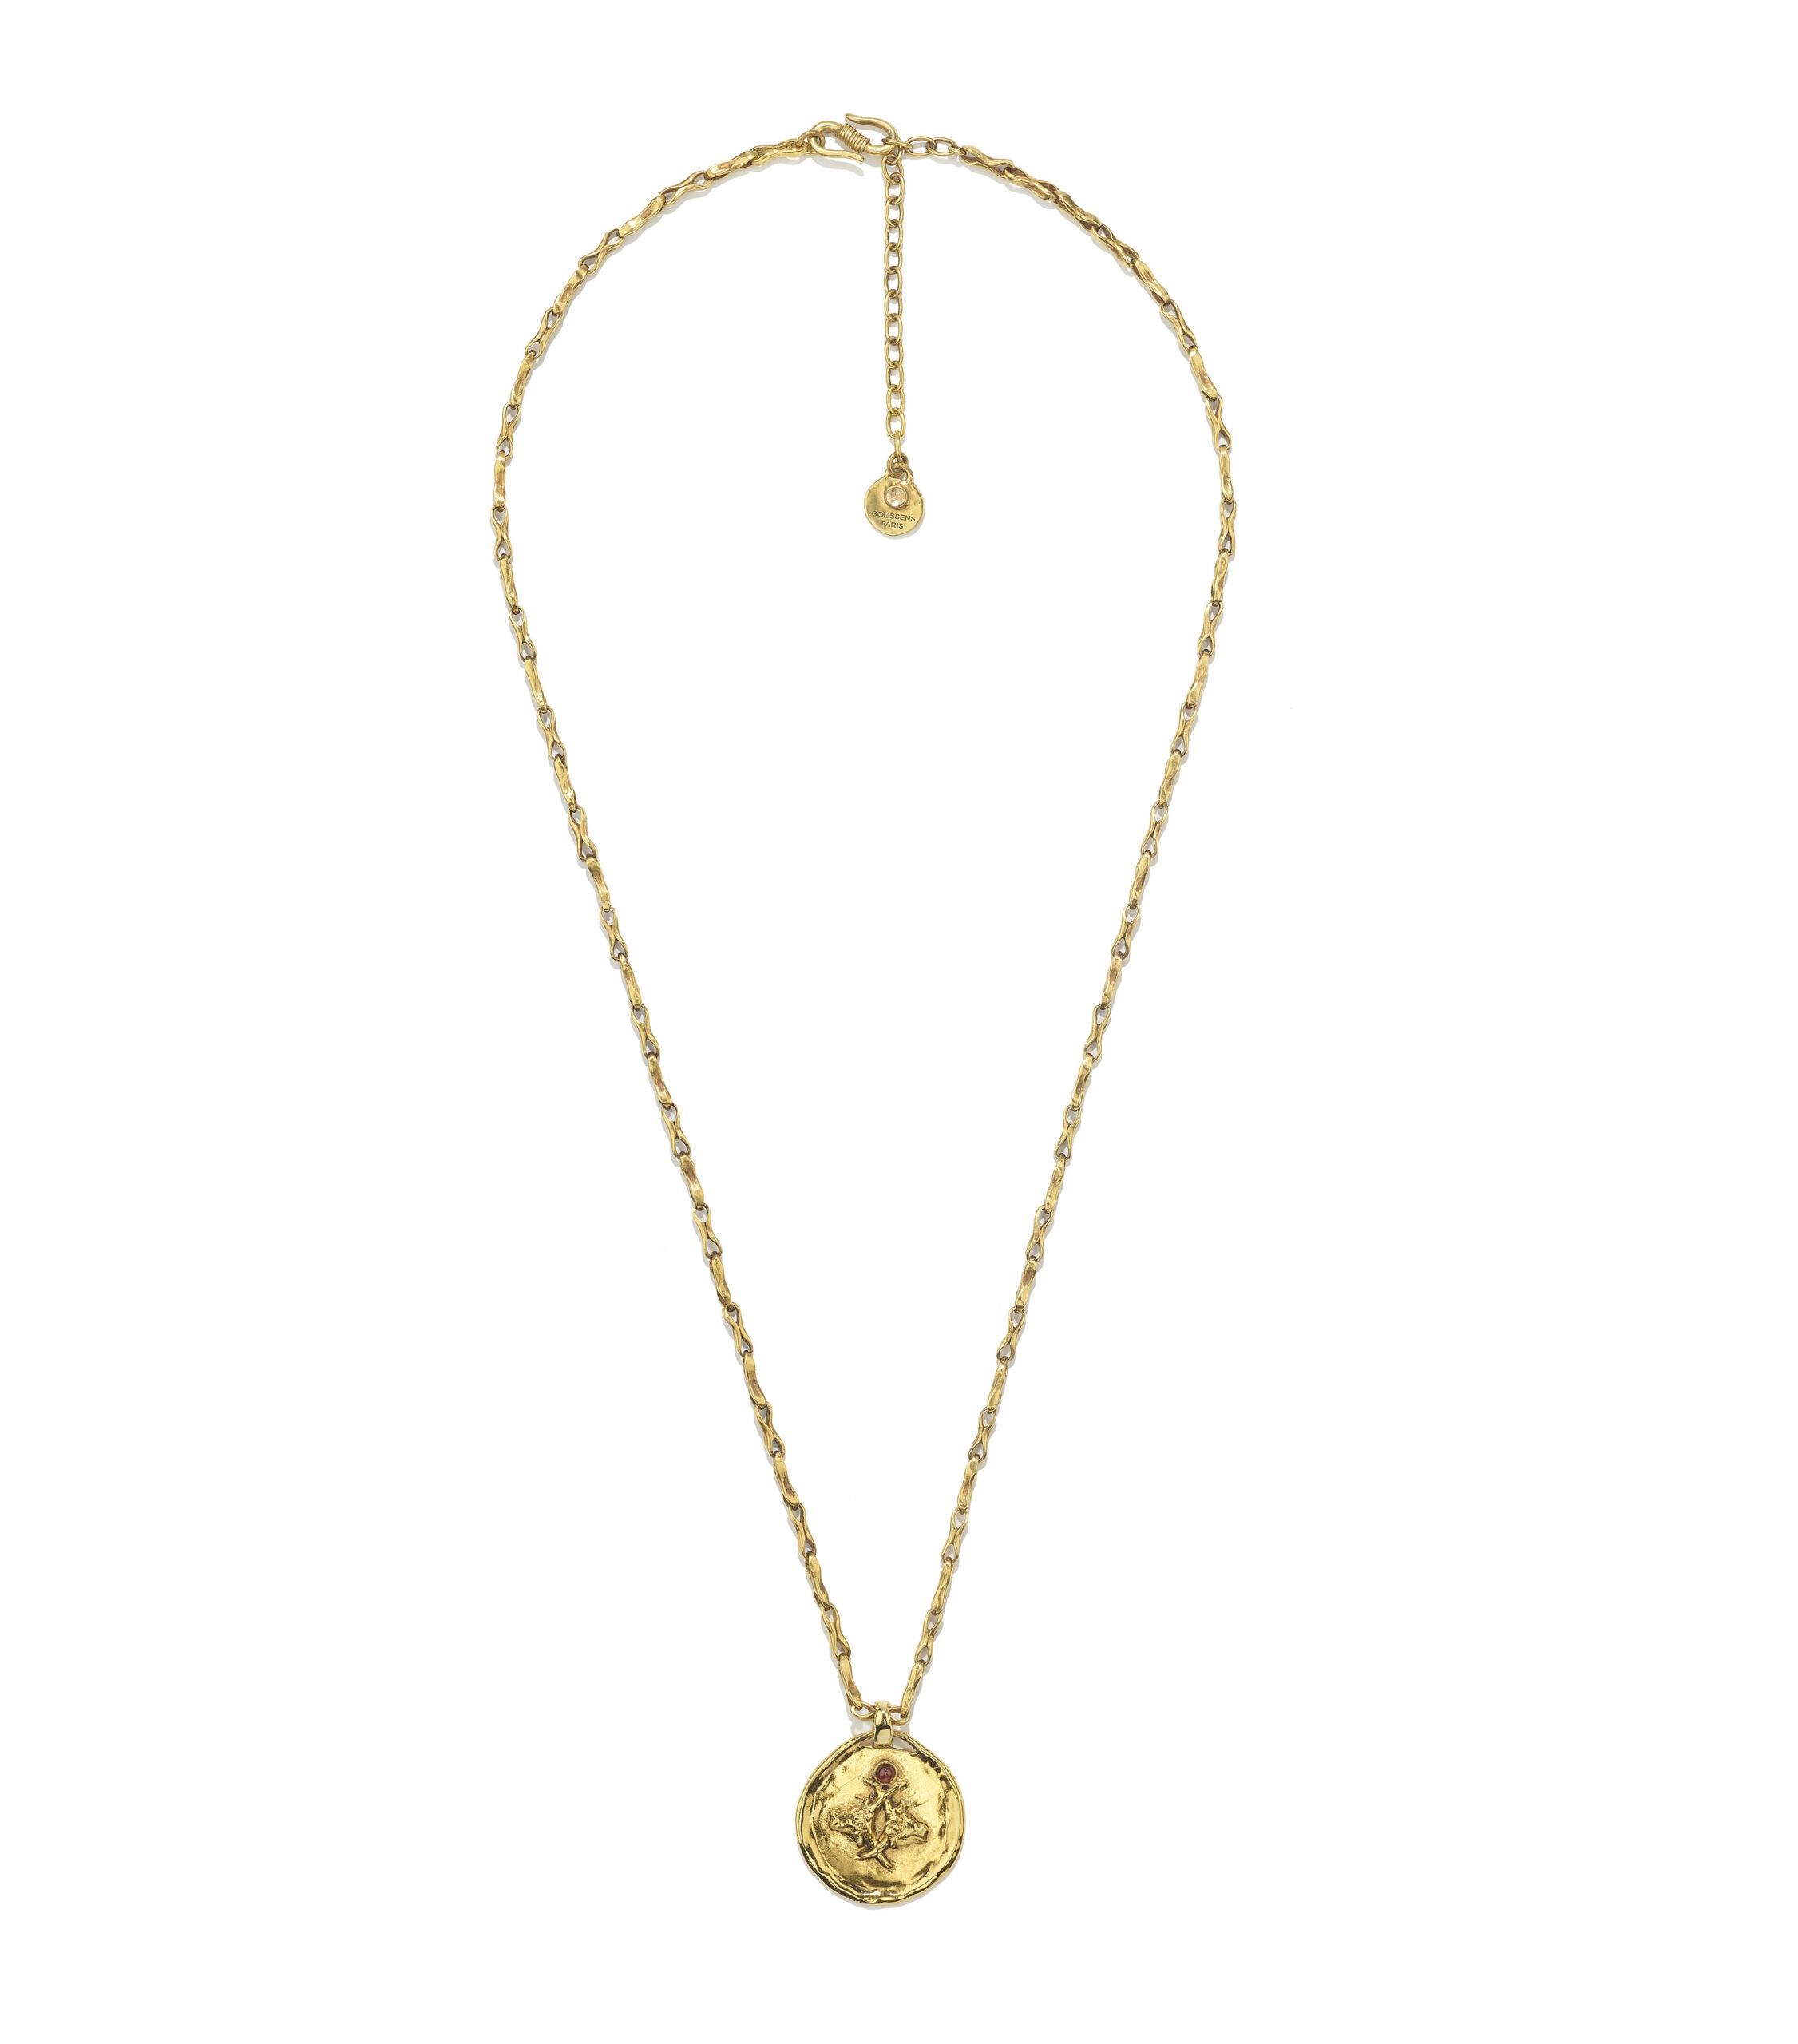 Talisman Astro Taurus long chain necklace